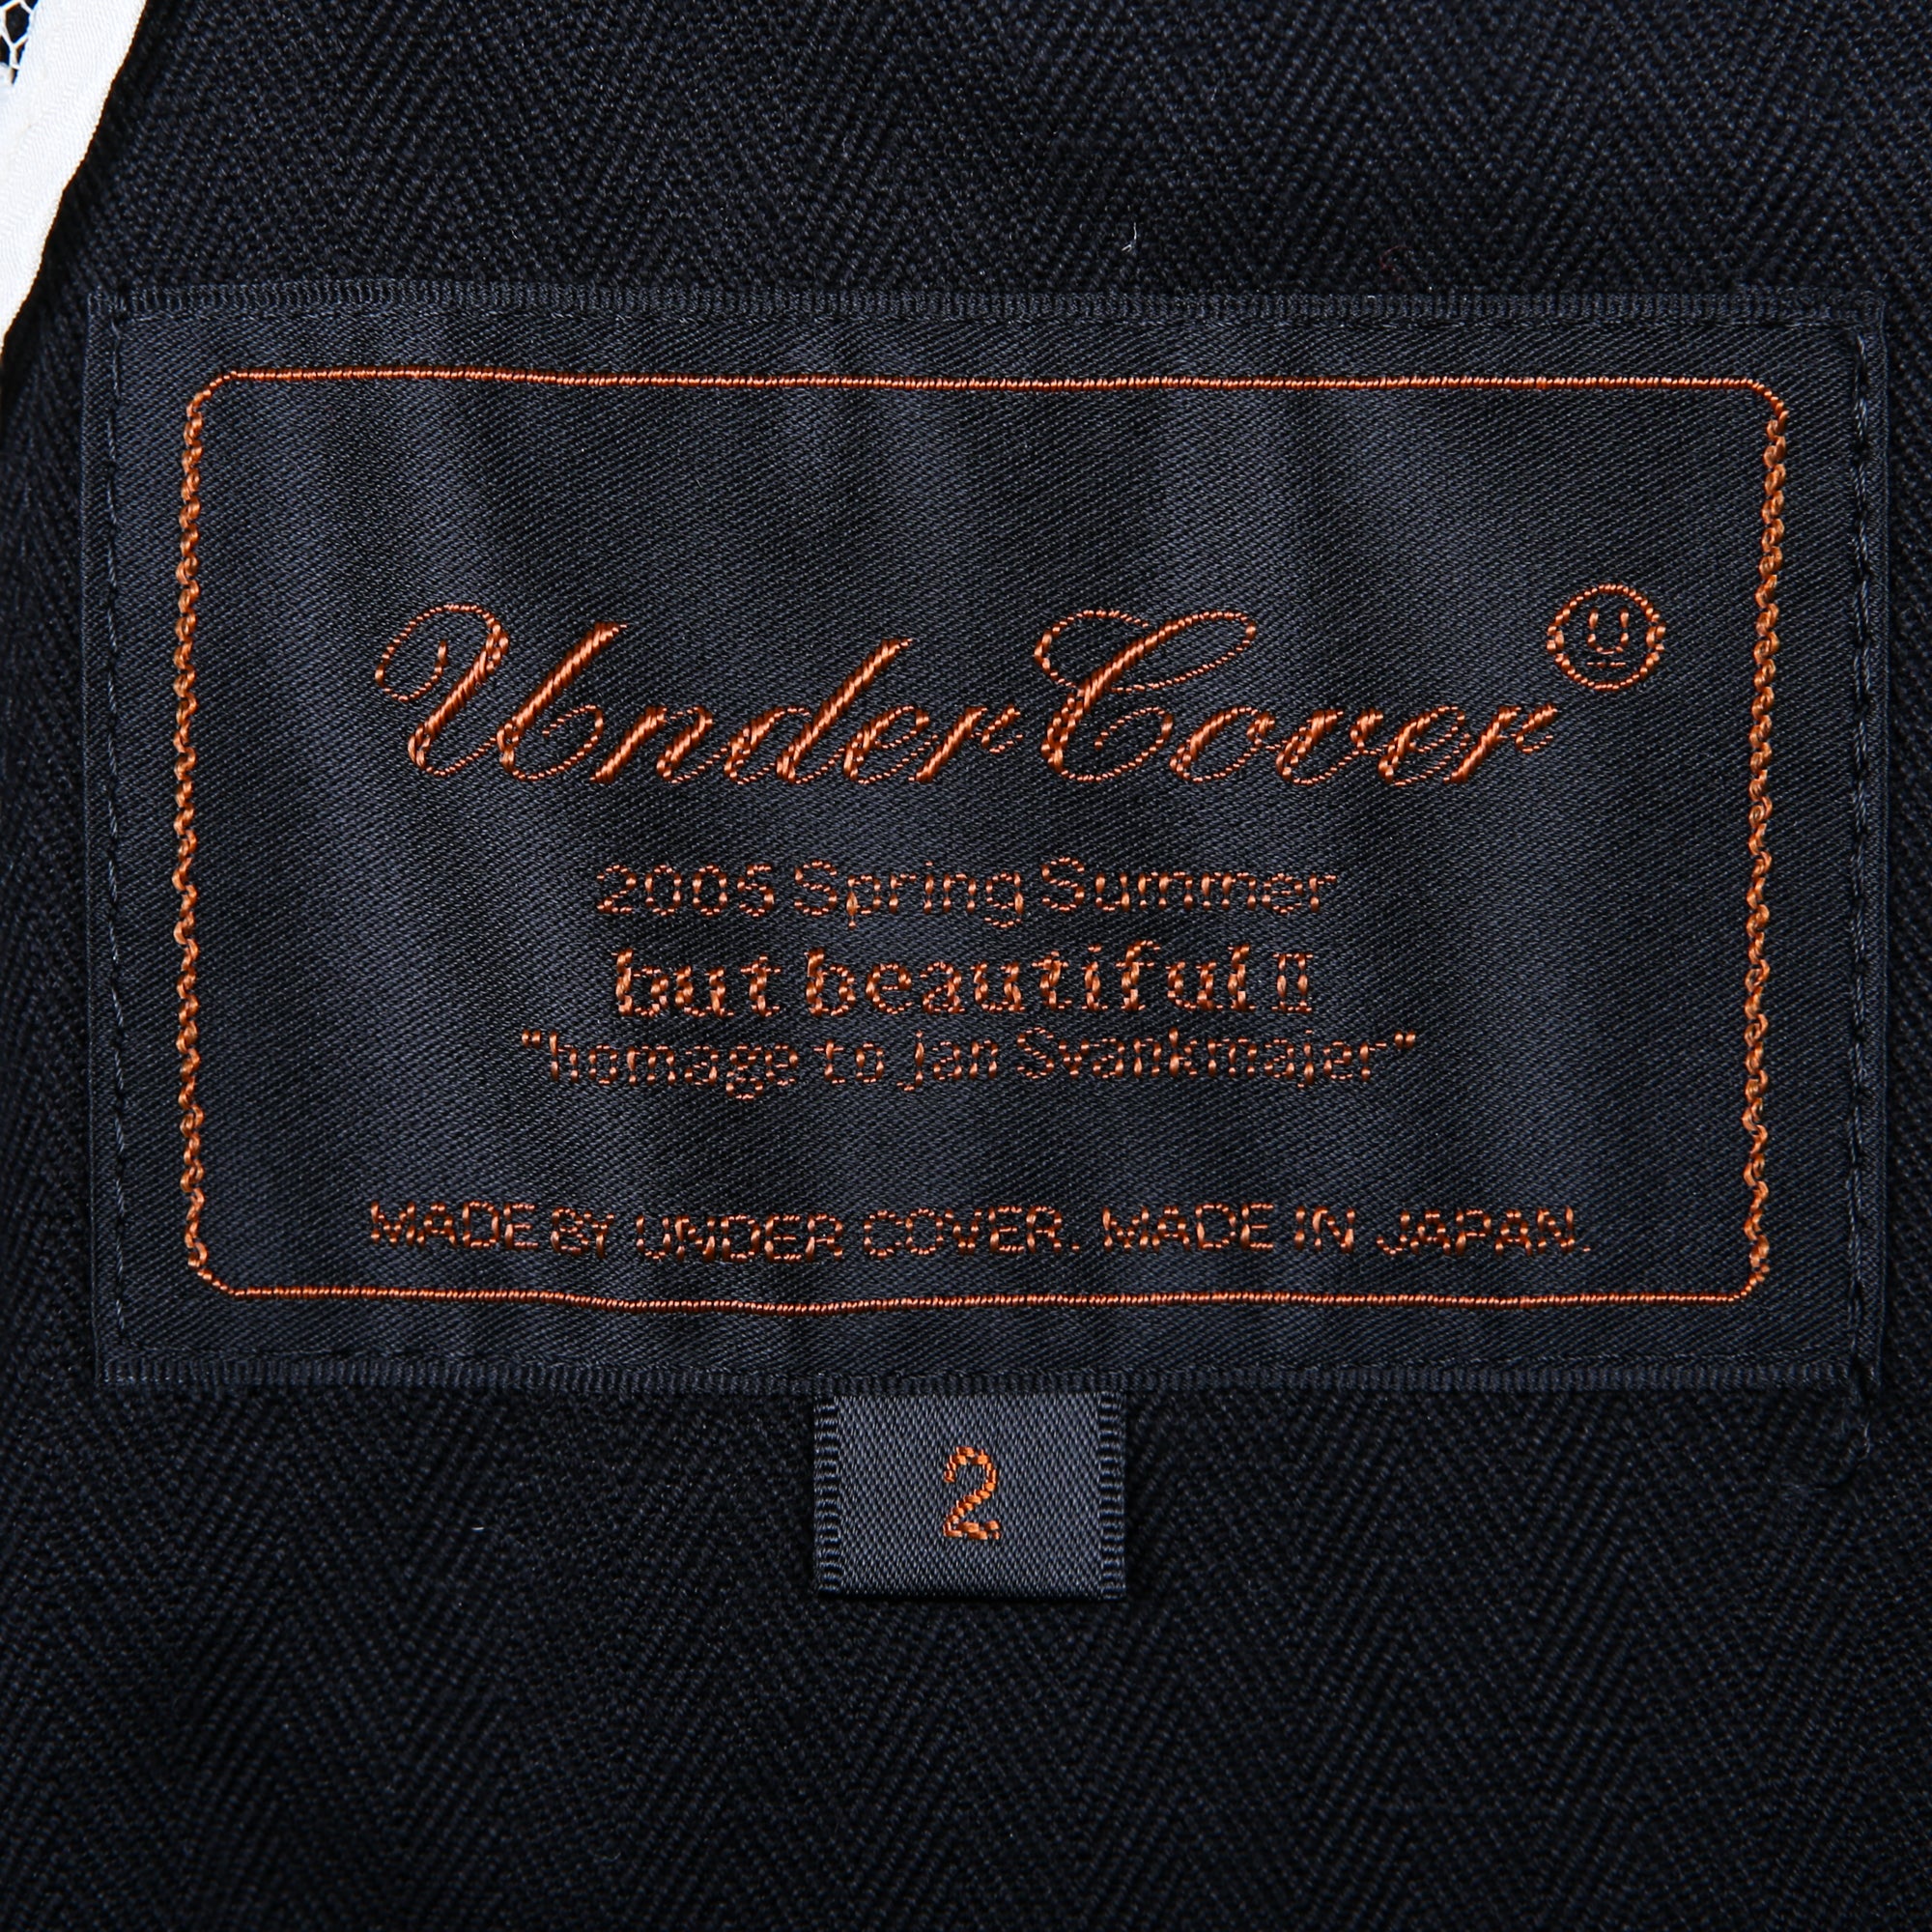 Undercover SS/05 But Beautiful II Blazer Jacket – akaibu.co